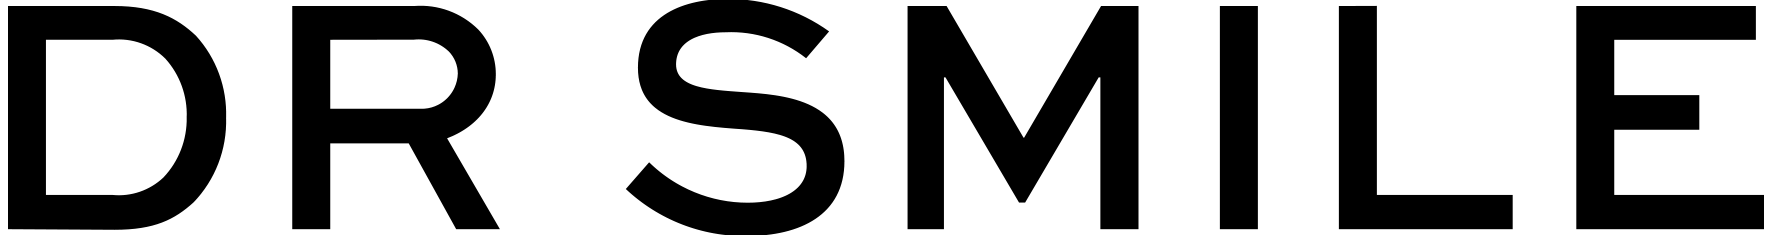 Dr. Smile Logo